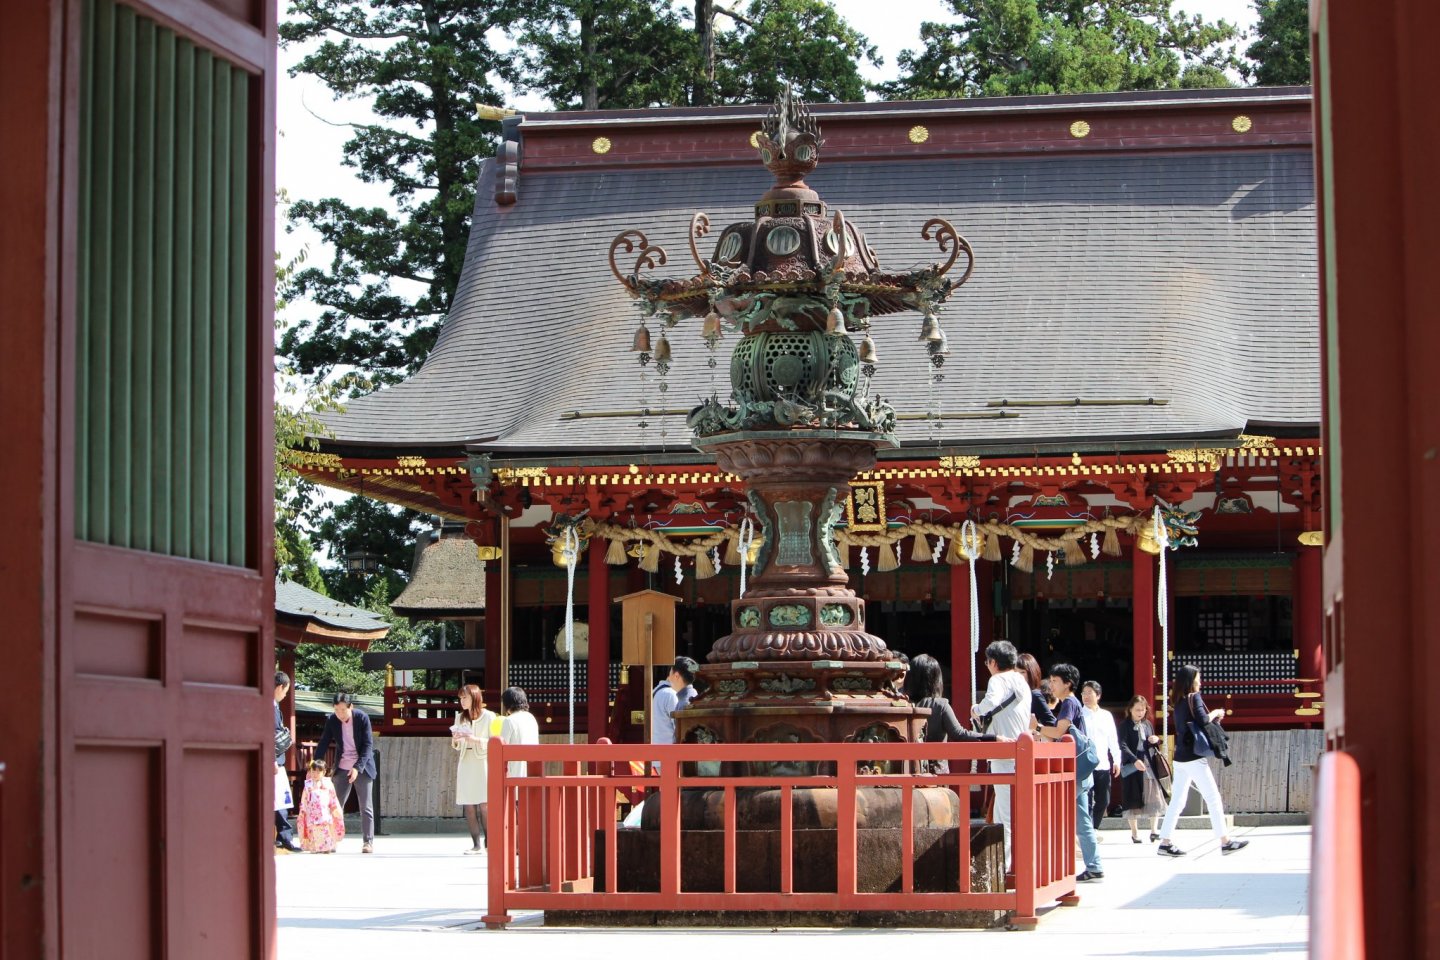 Lantern in the center of Shiogama Shrine